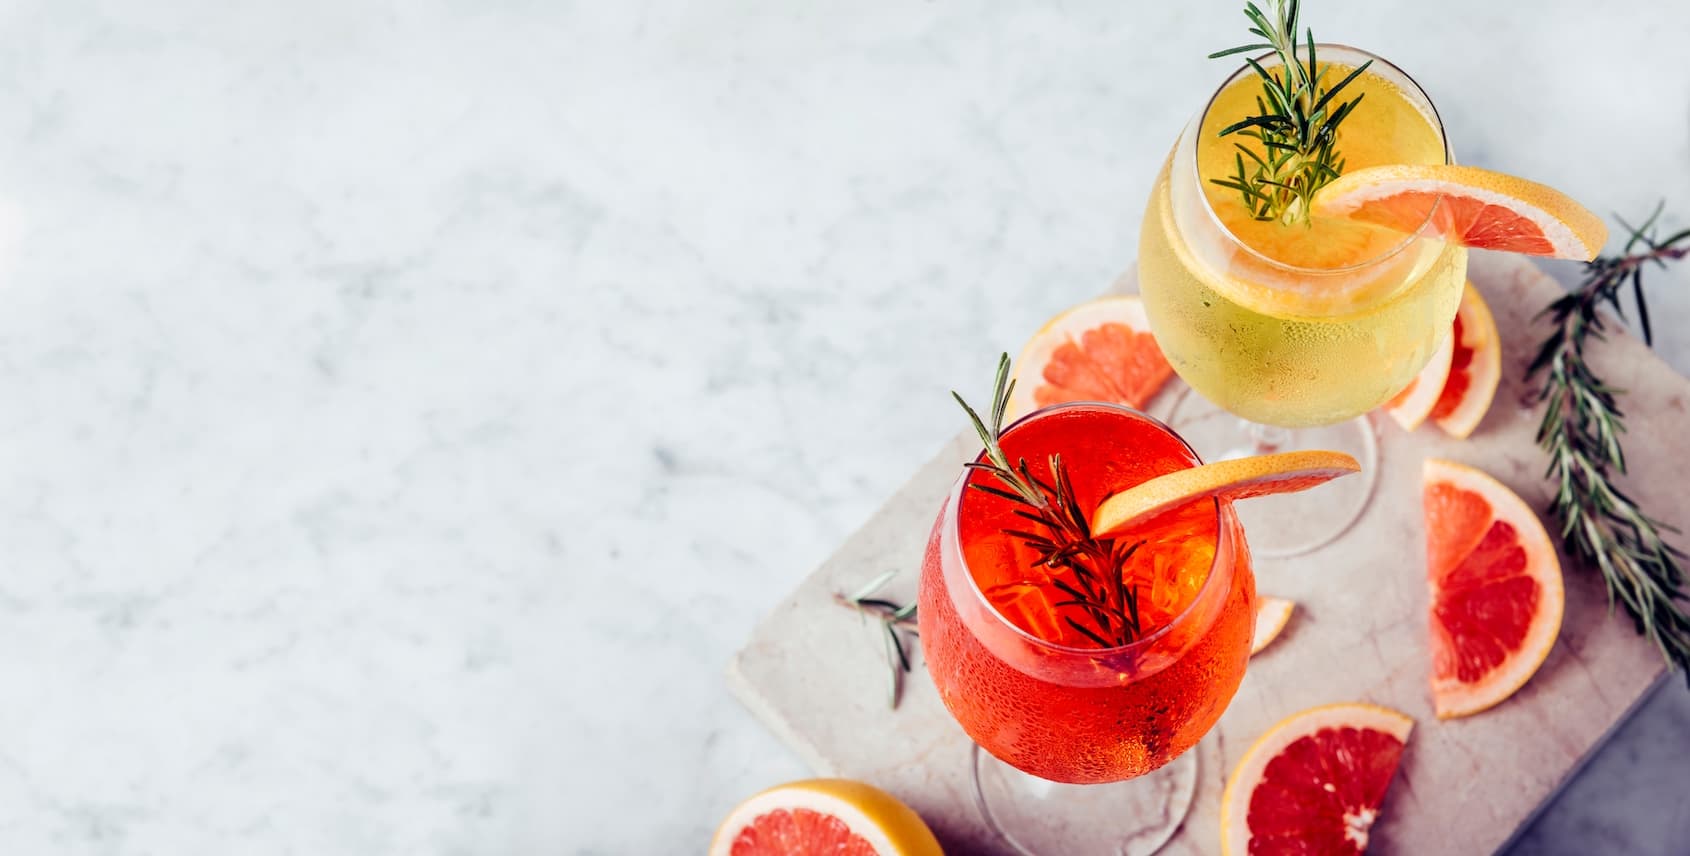 2 spritz cocktails with fruit